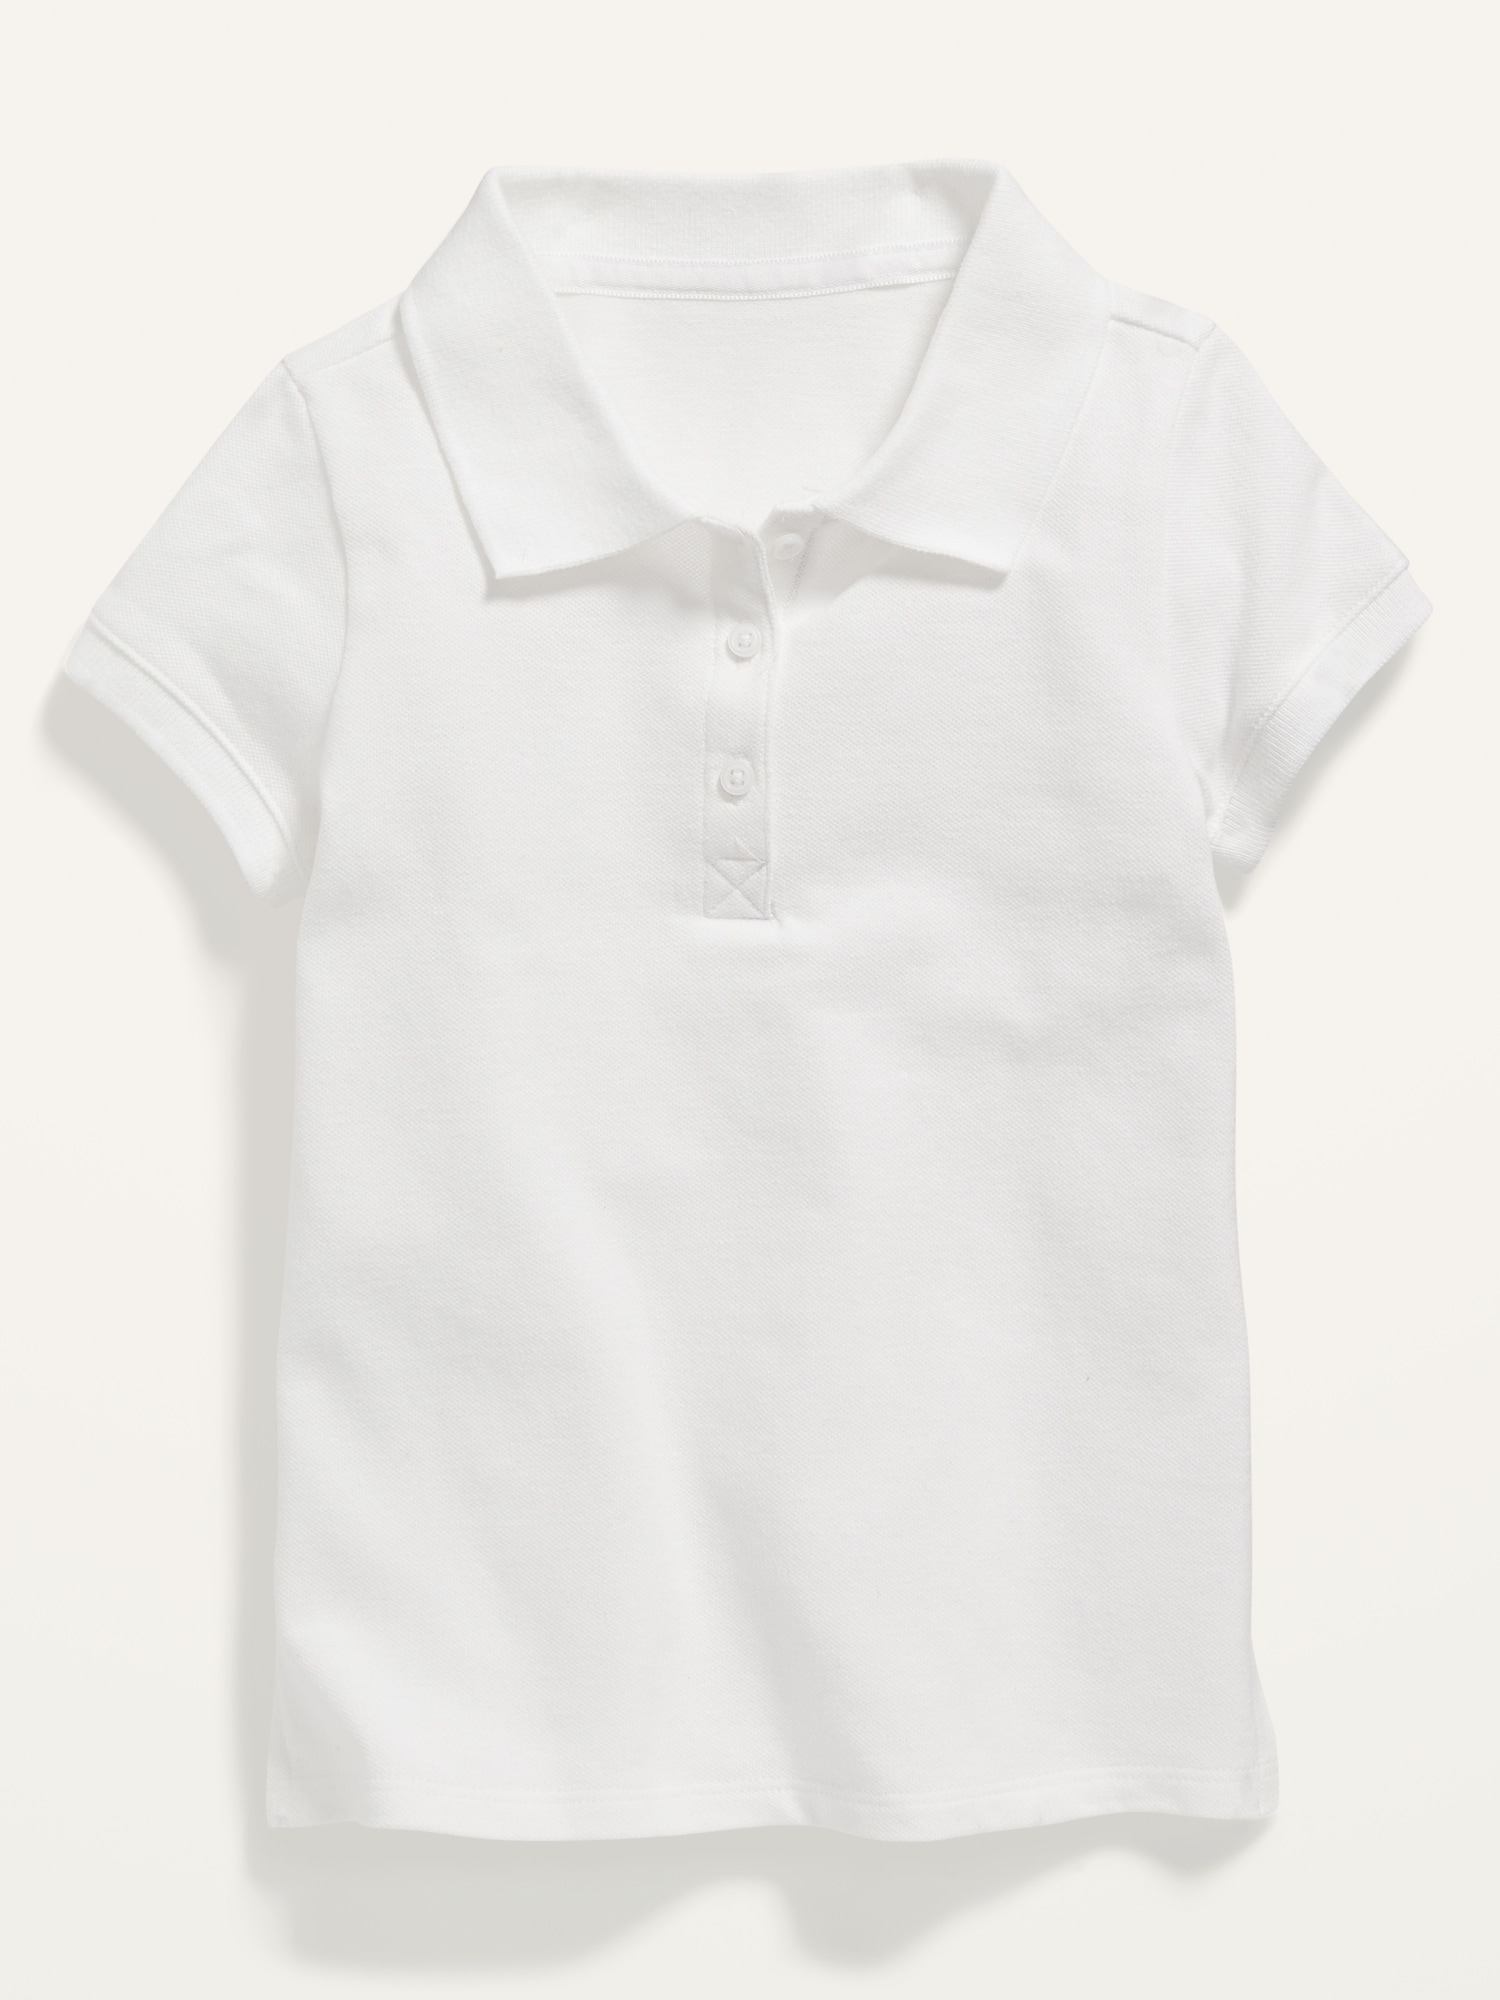 Uniform Short-Sleeve Pique Polo for Toddler Girls